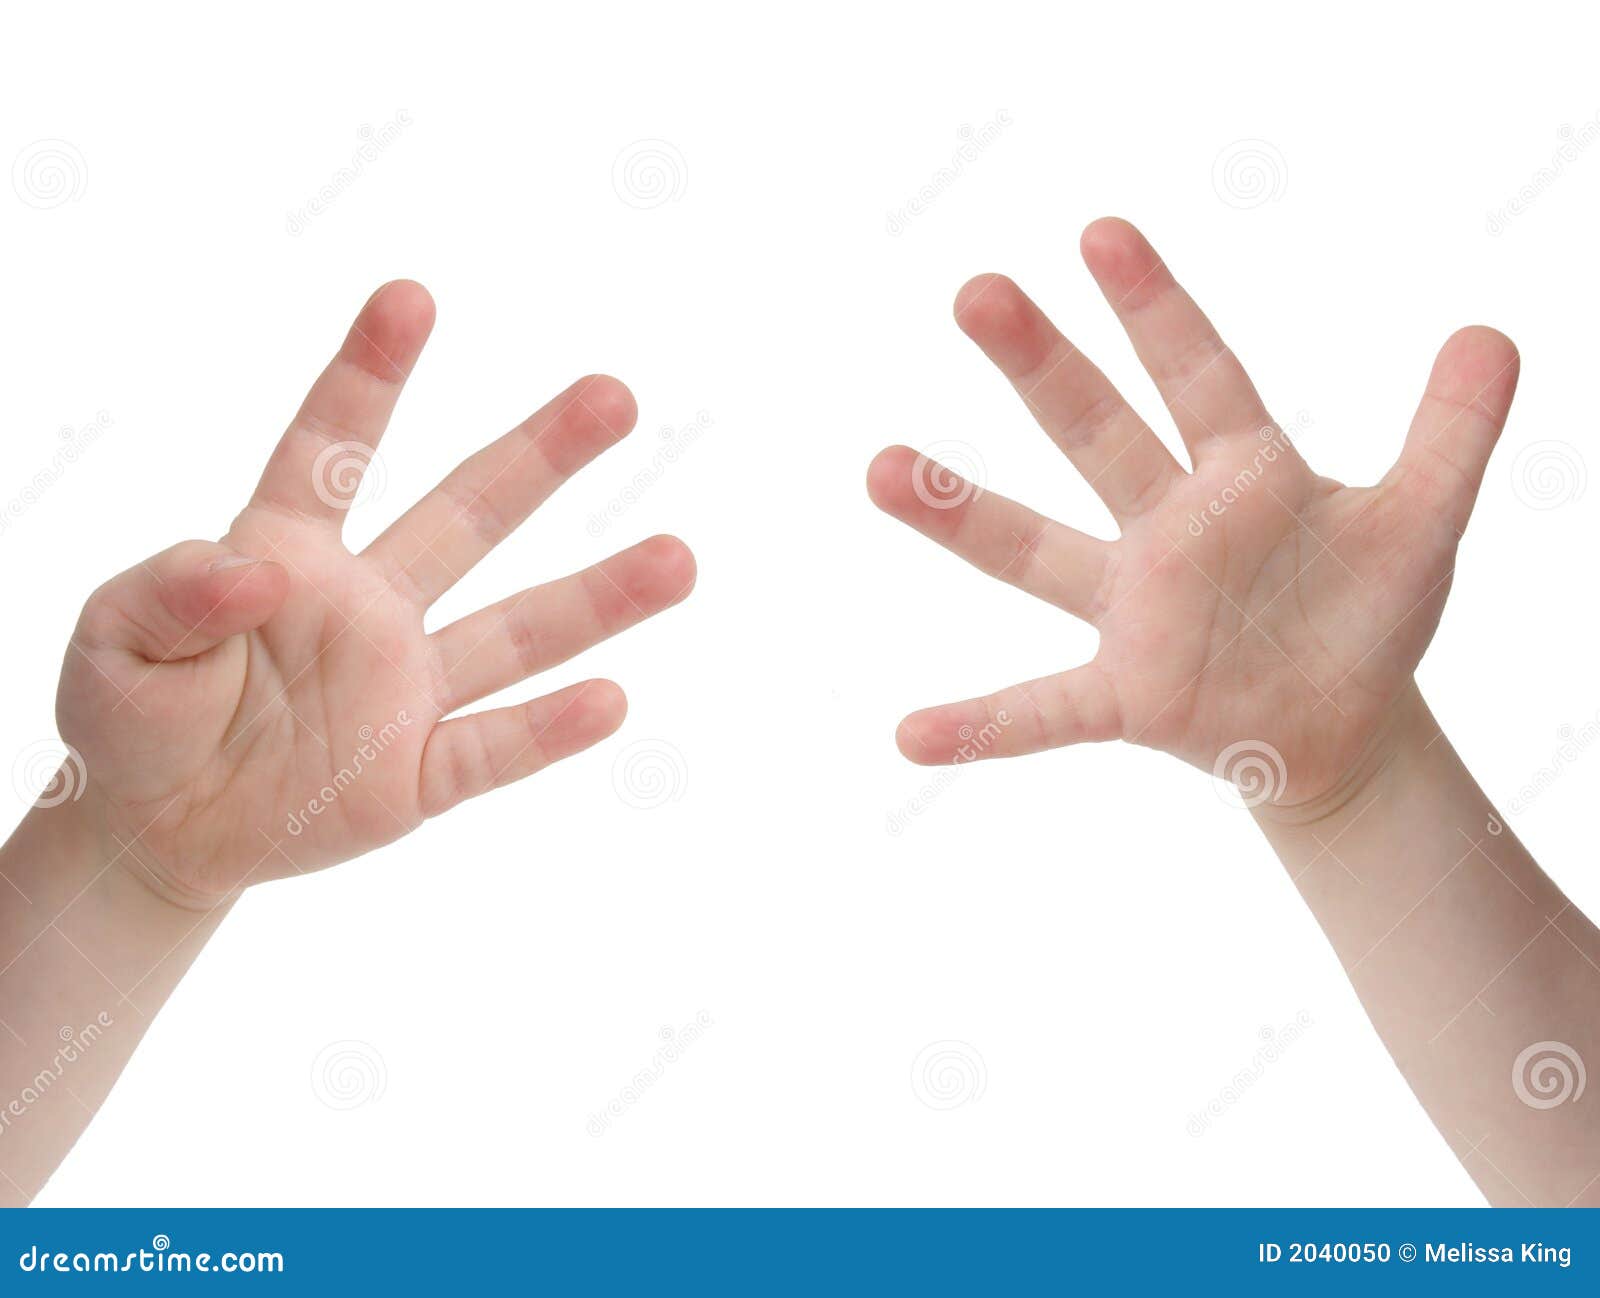 nine fingers